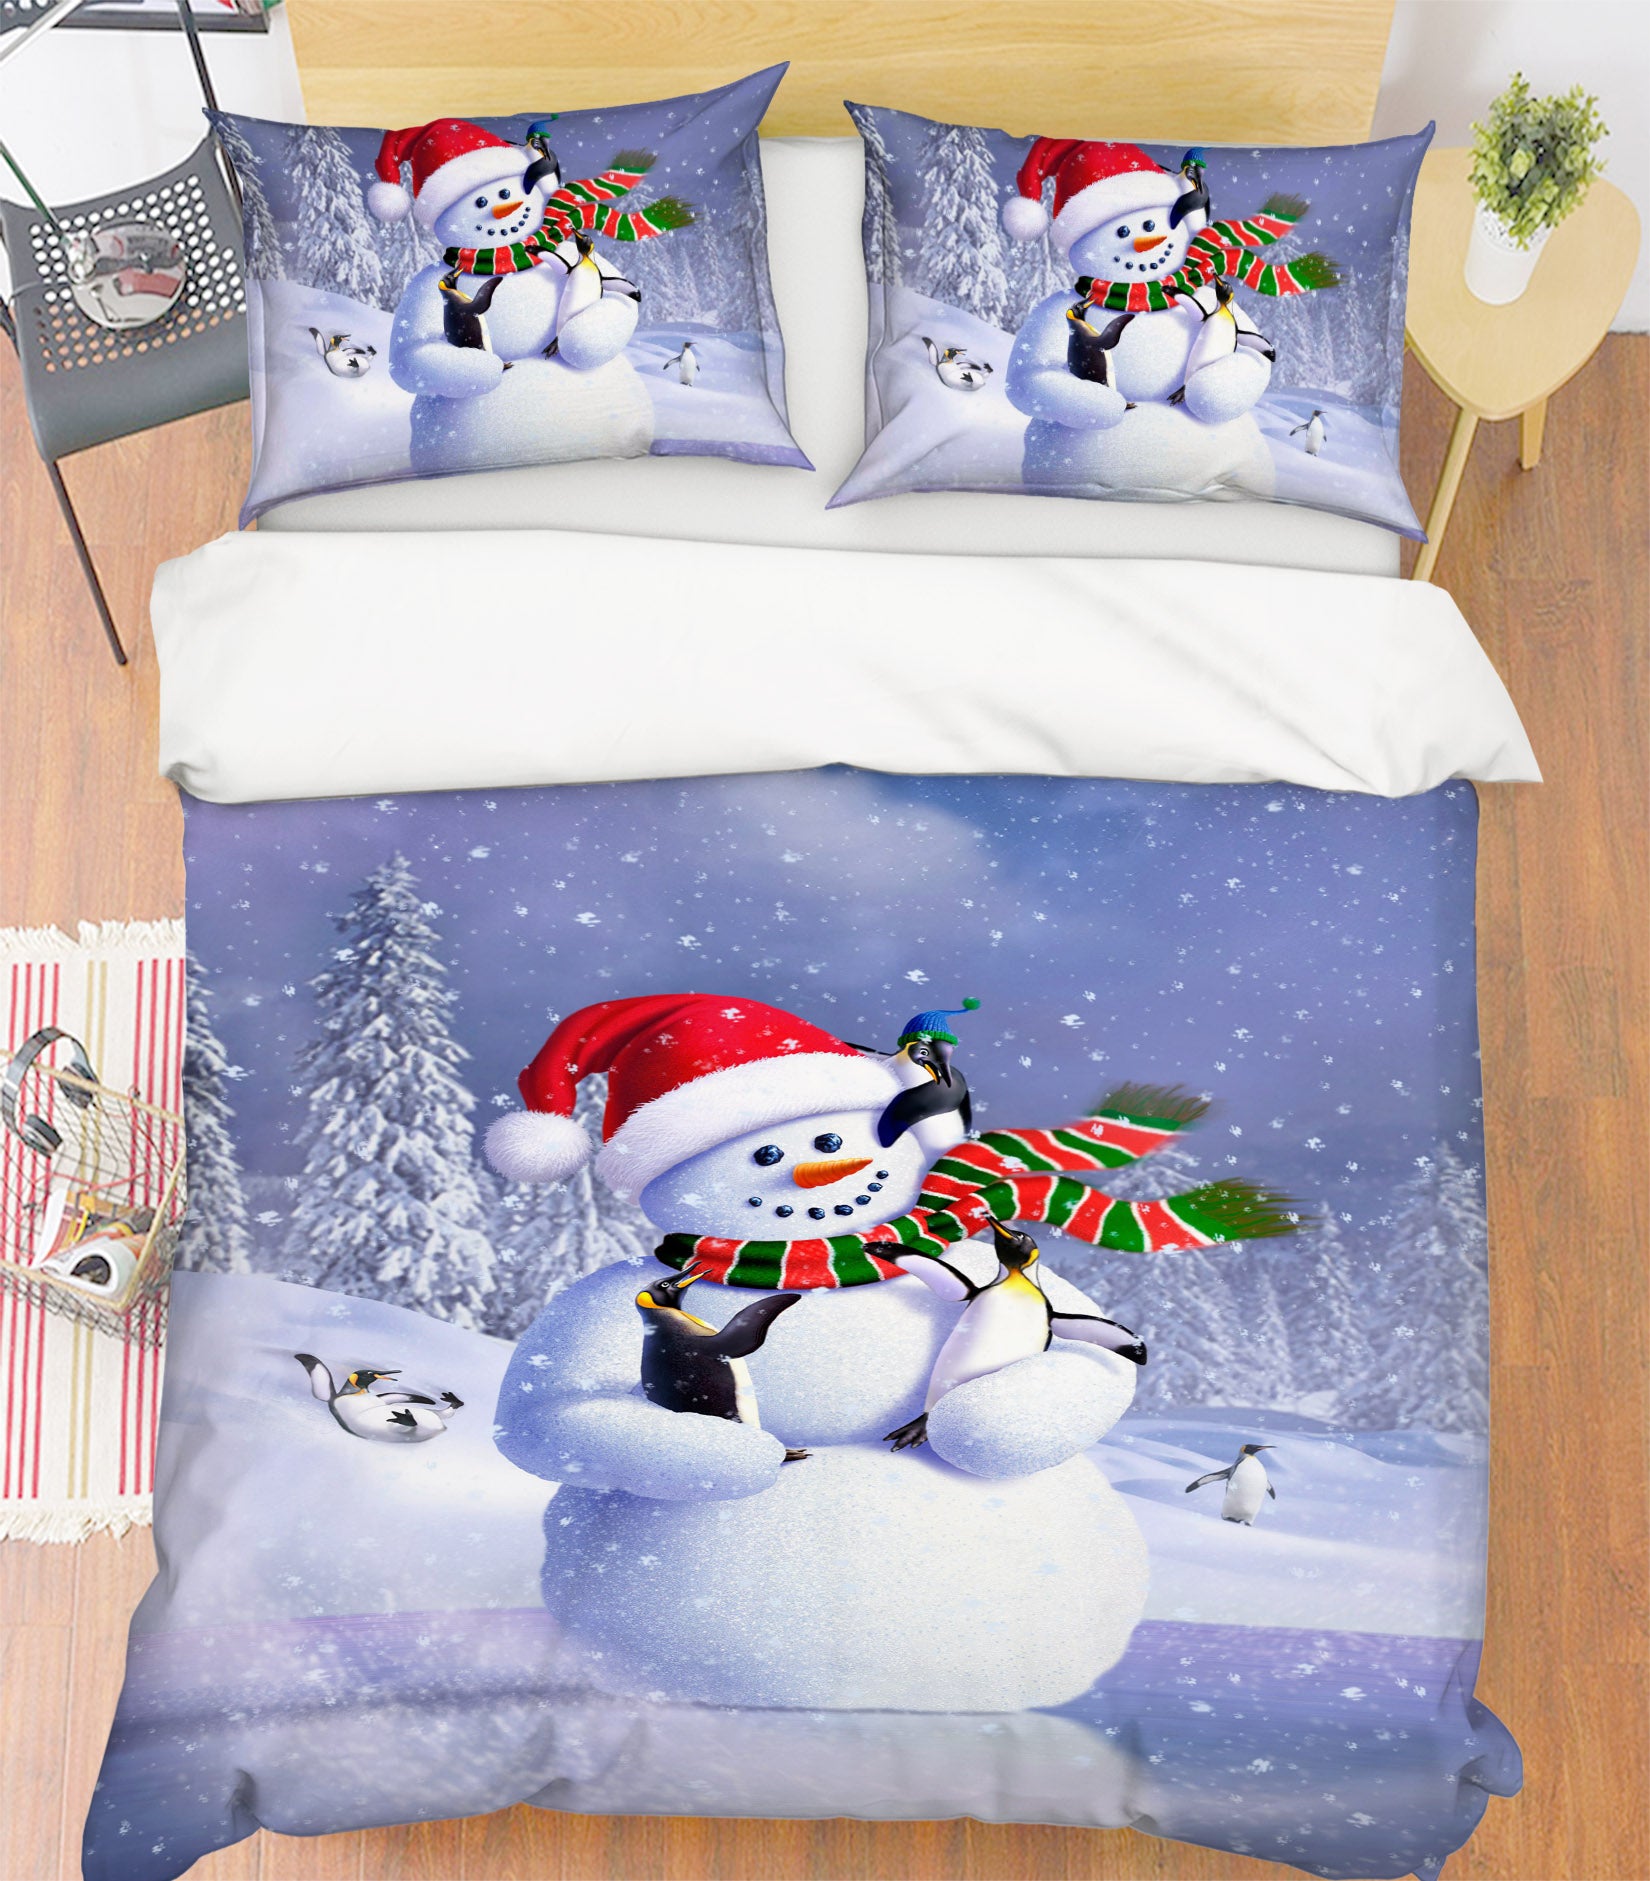 3D Snowman 86045 Jerry LoFaro bedding Bed Pillowcases Quilt